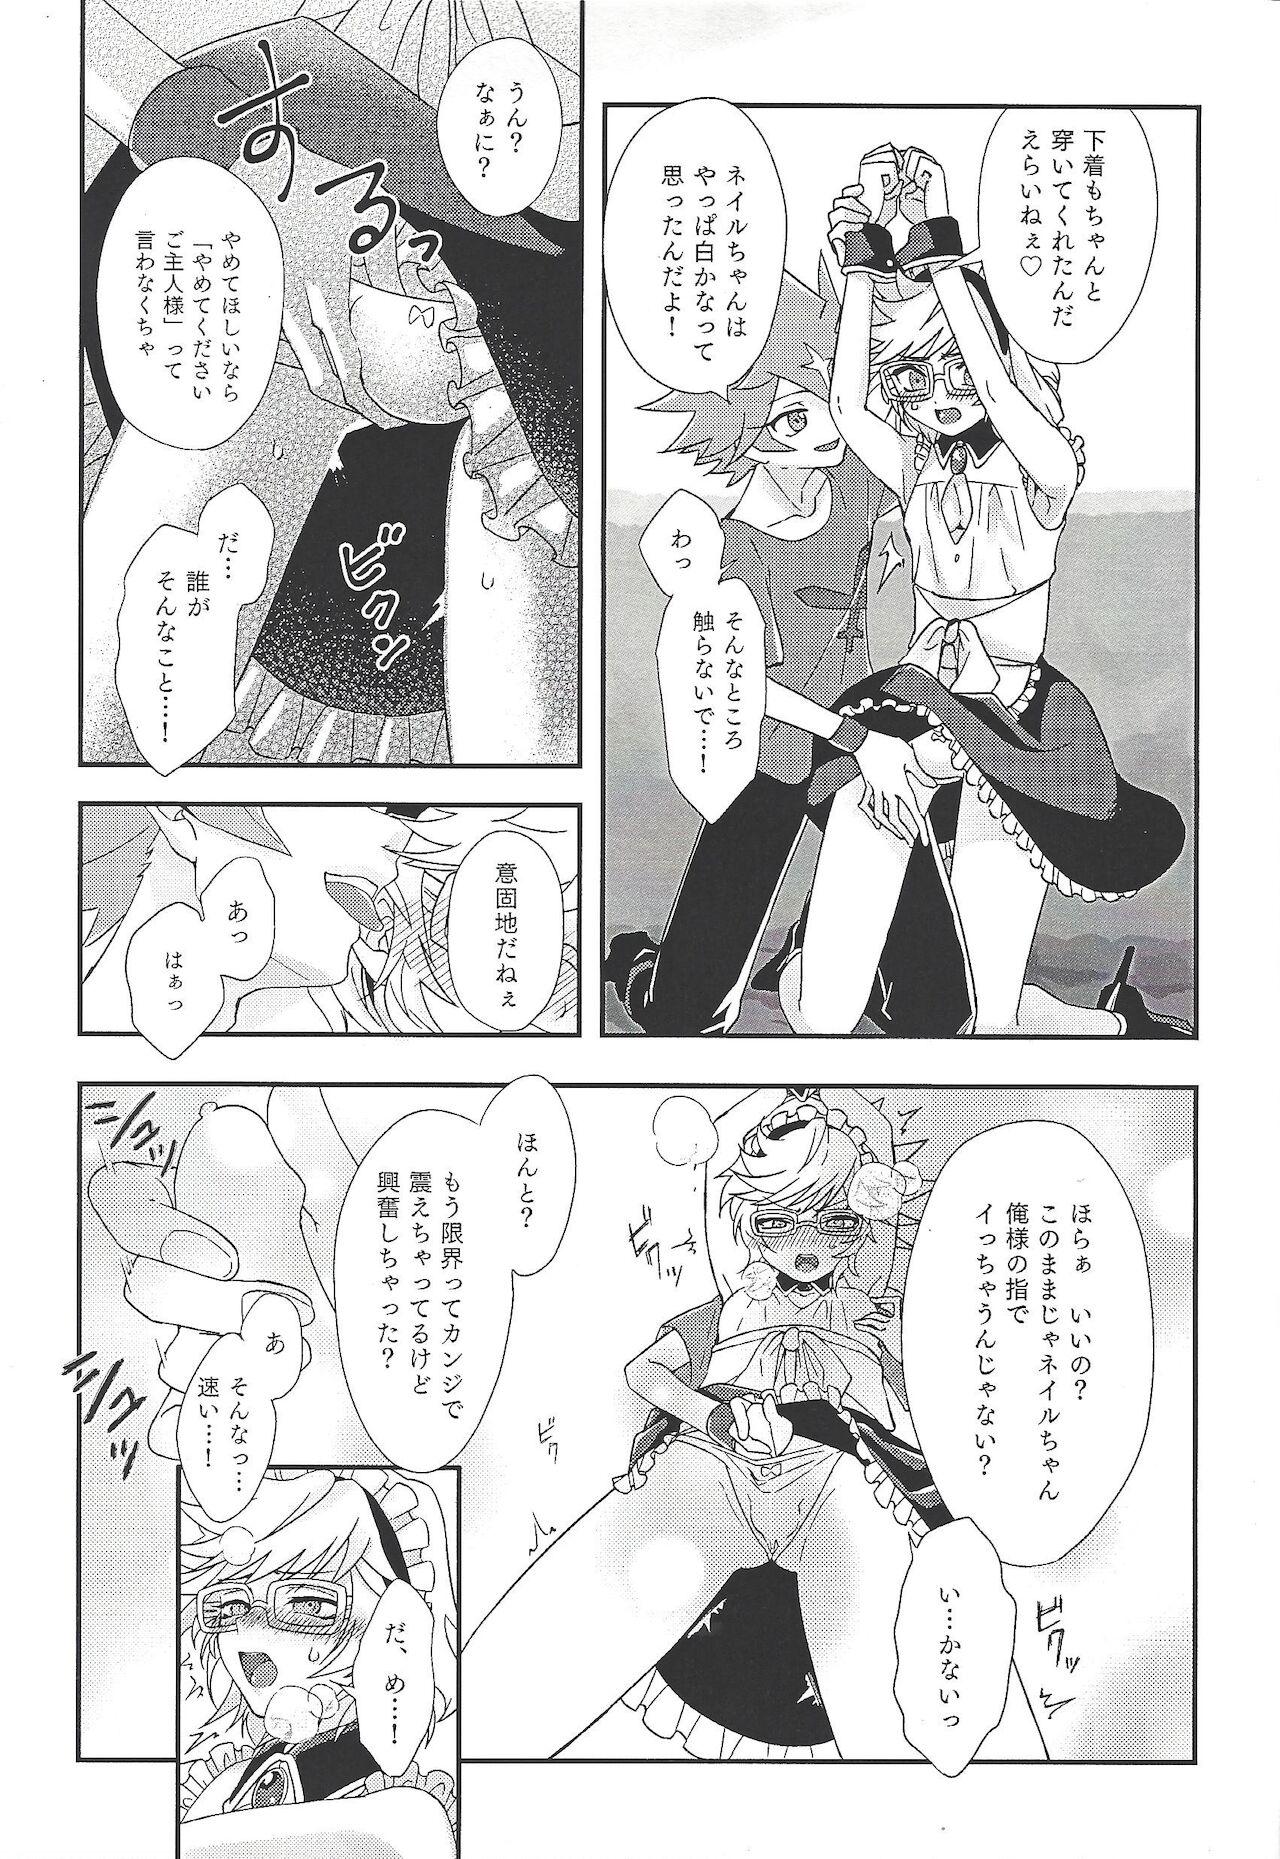 Furry Goshujinsama tte ieru yo ne?? - Yu-gi-oh sevens Classic - Page 8